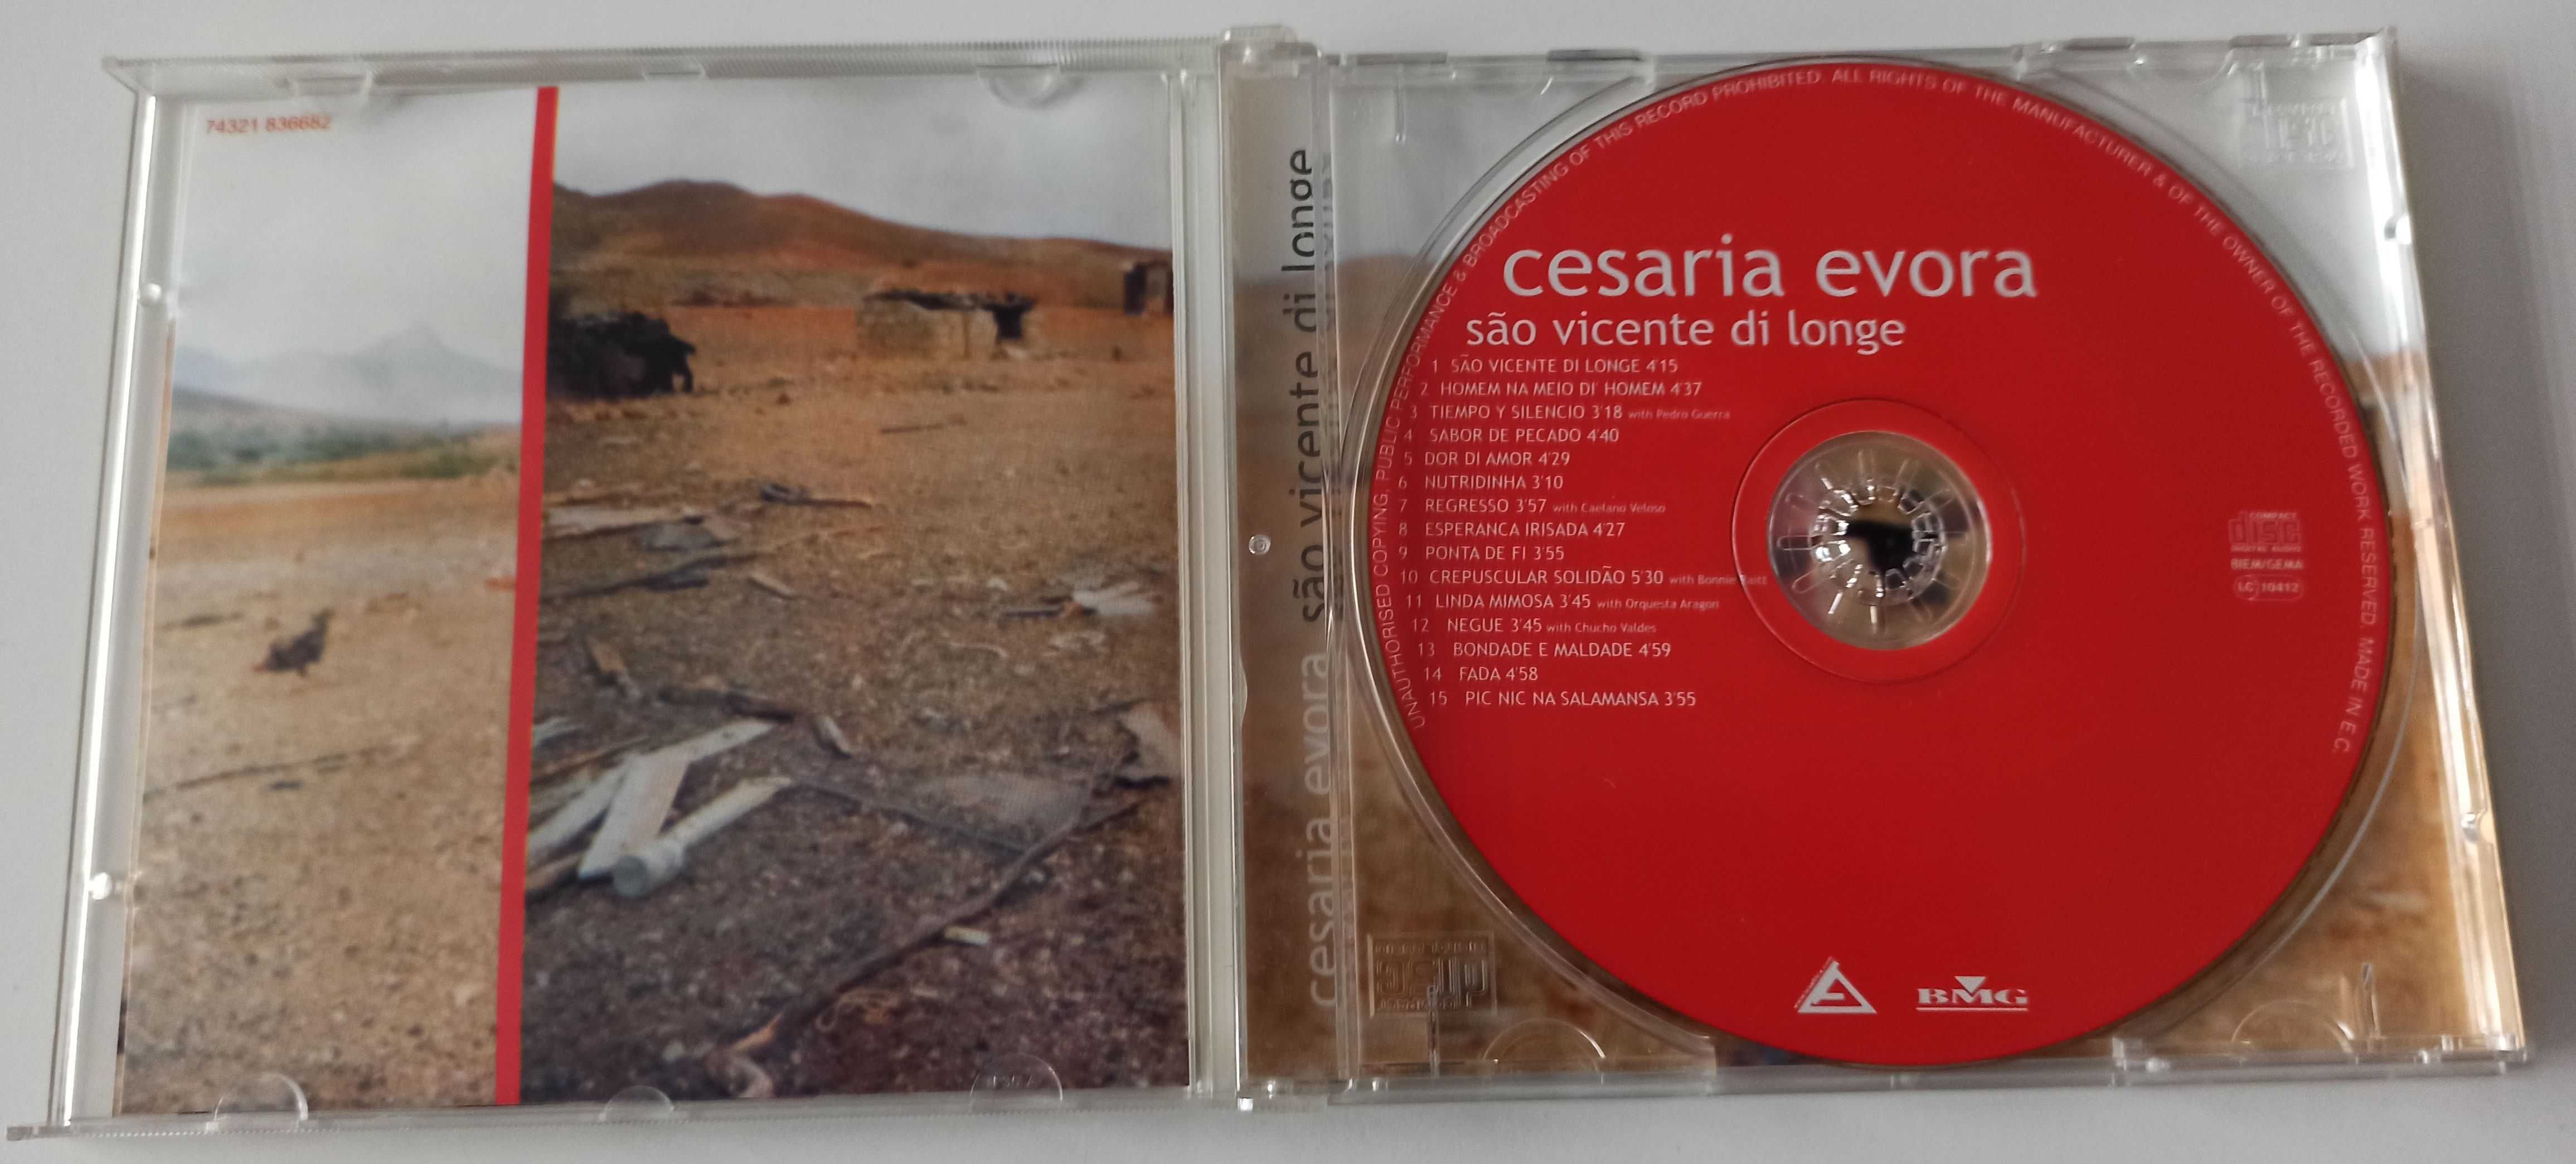 Cesaria Evora Sao vicente di longe morna CD